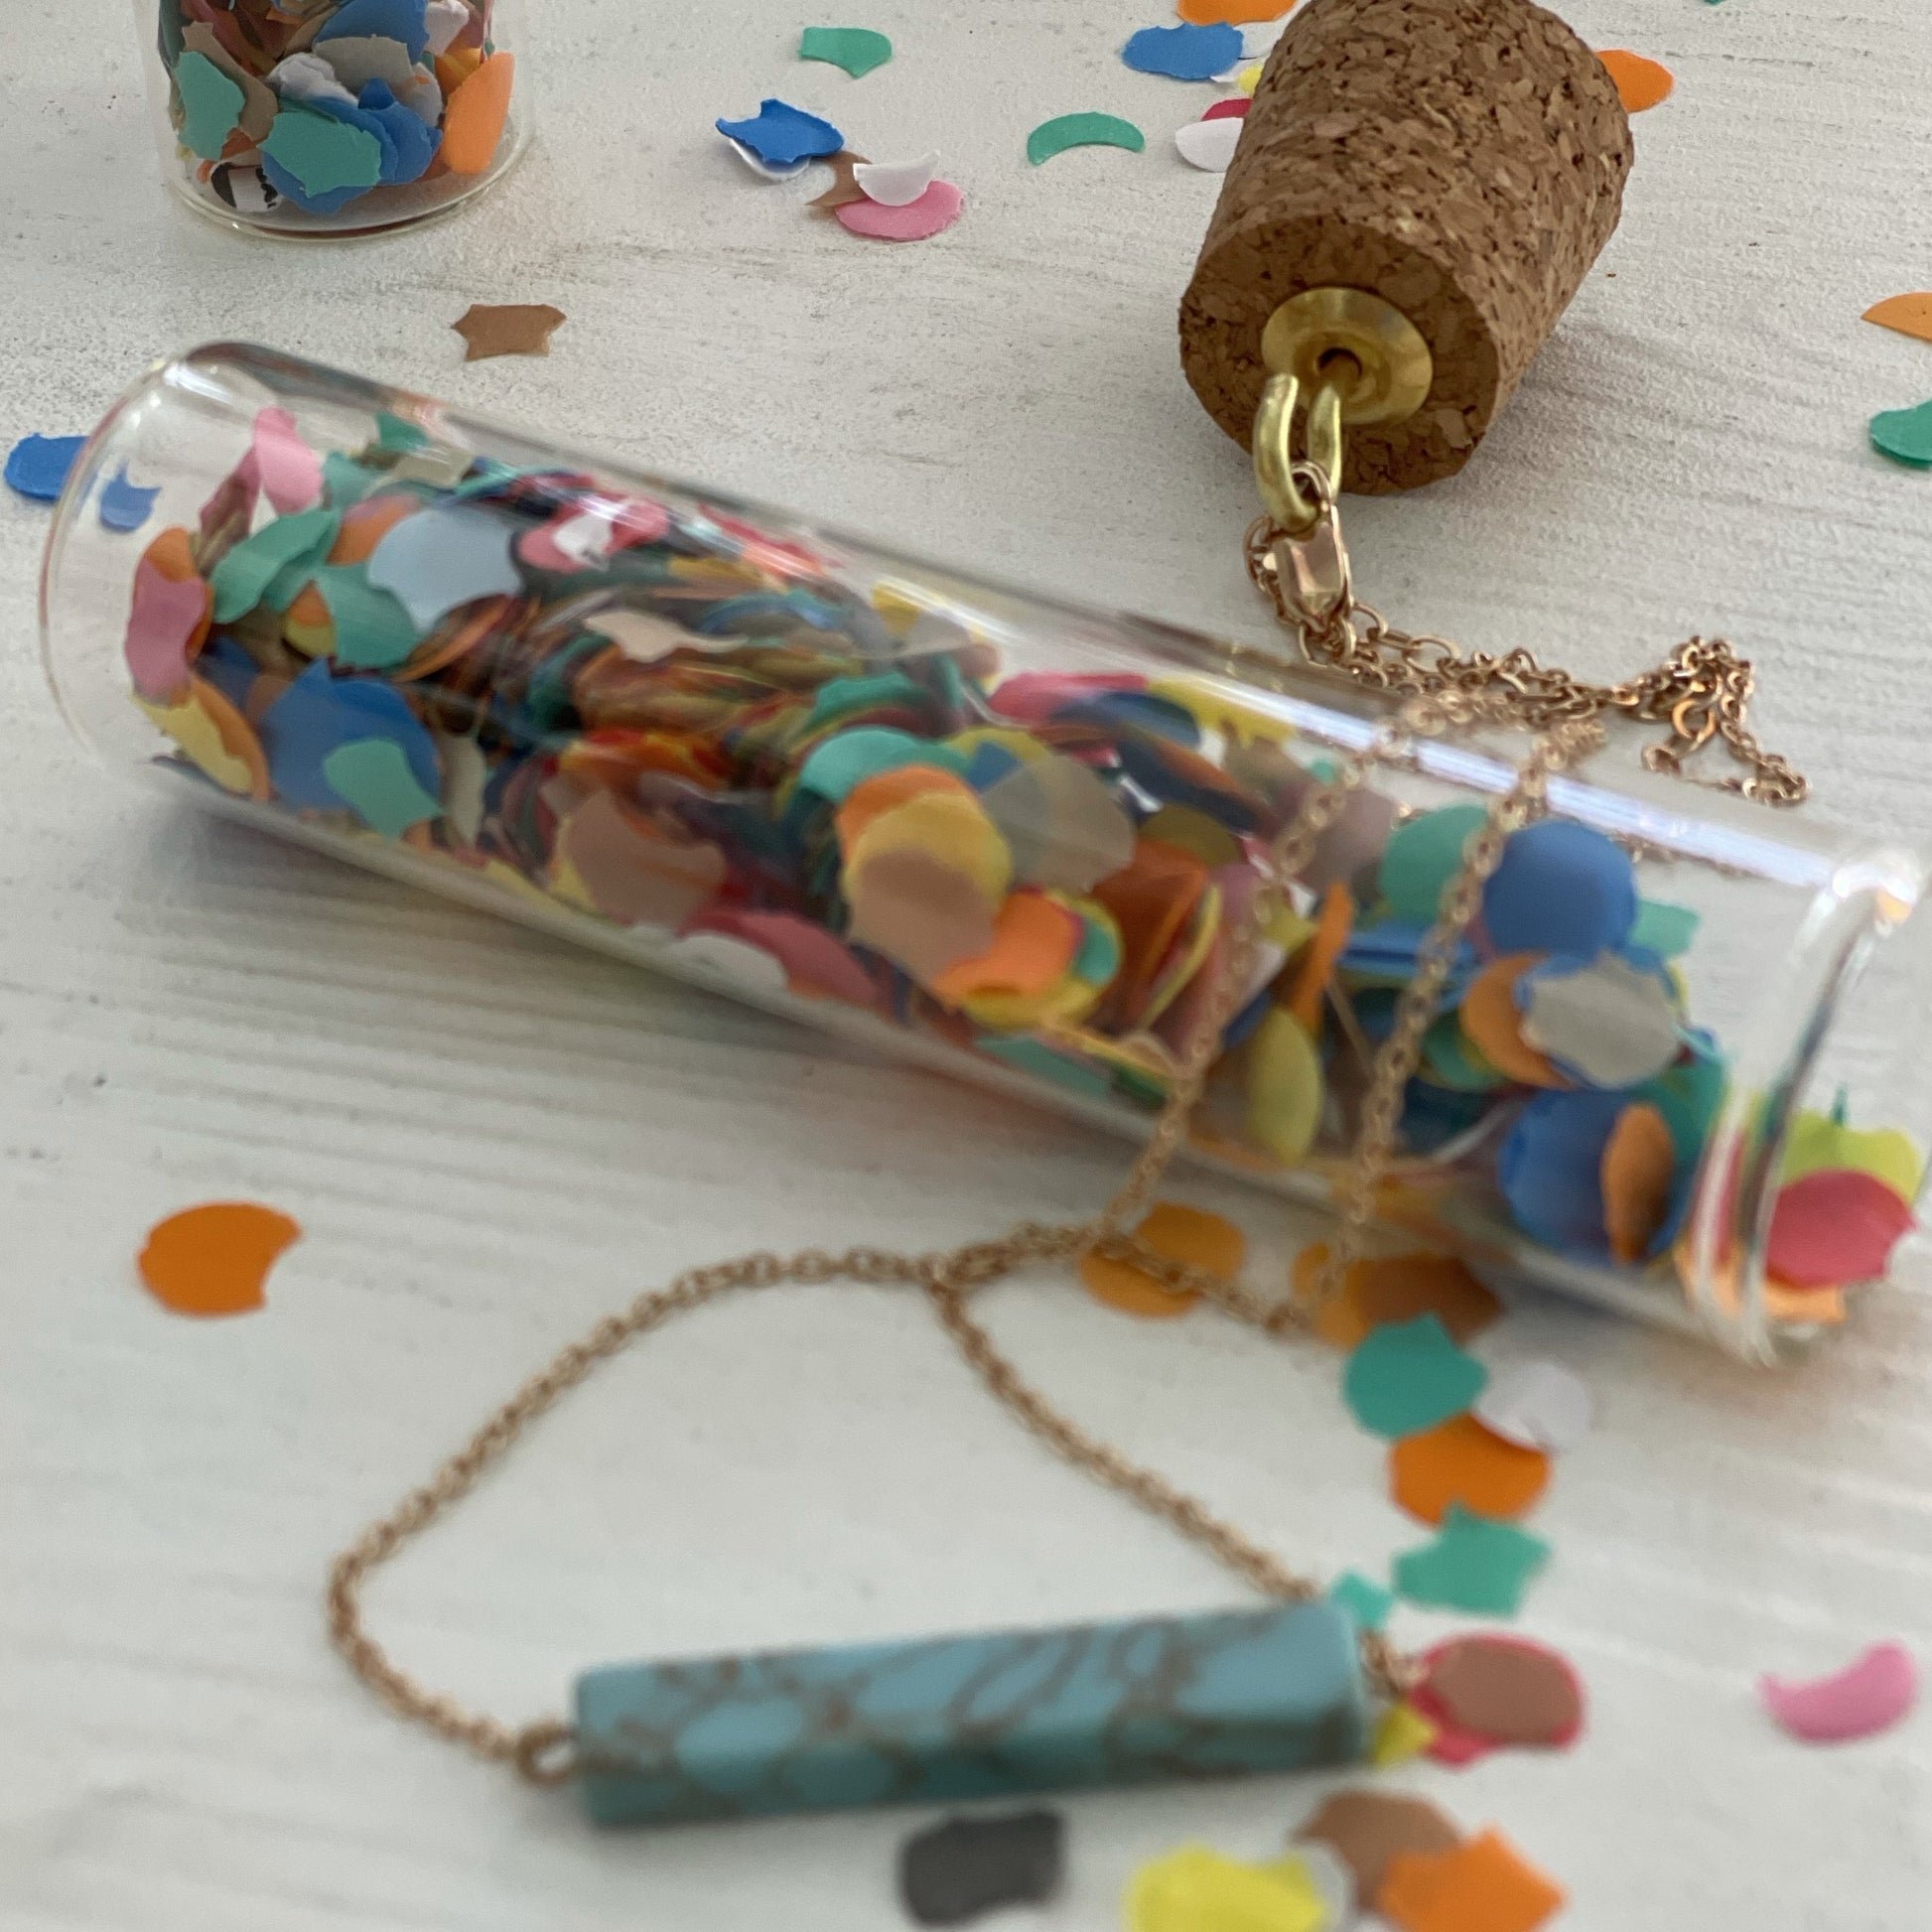 stone pendant necklace in glass tube with confetti